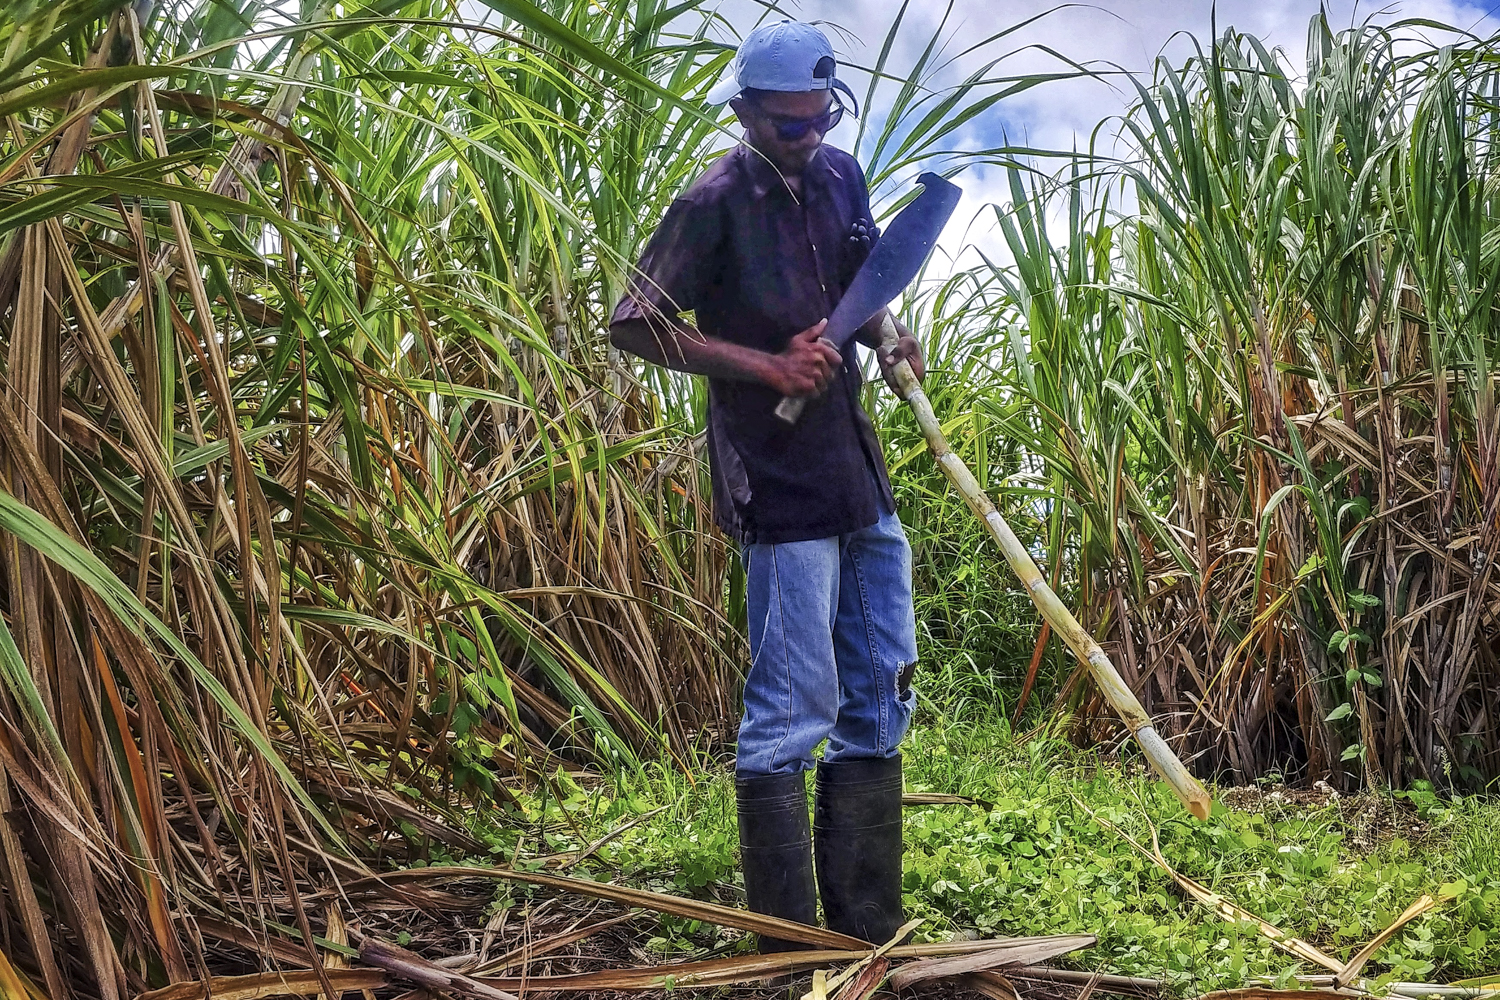 barbados bars restaurants distlleries guide traditional sugar cane harvesting at mount gay rum plantation 17